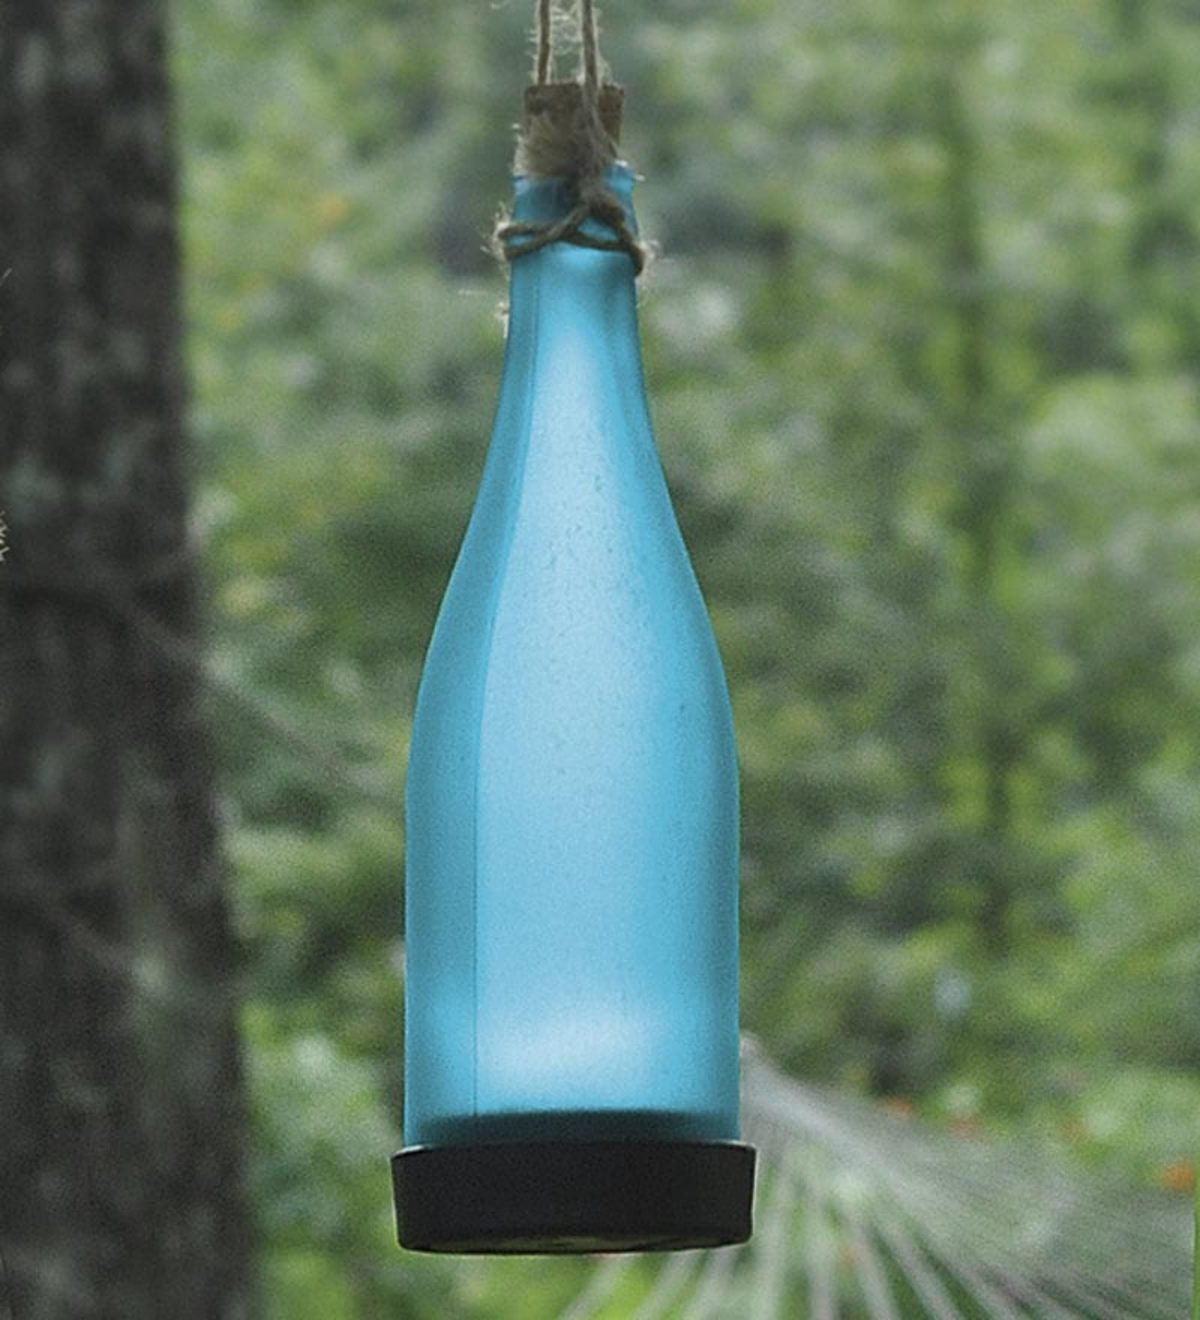 Metal Bottle Tree With Set of 10 Solar-Powered Bottles - Blue